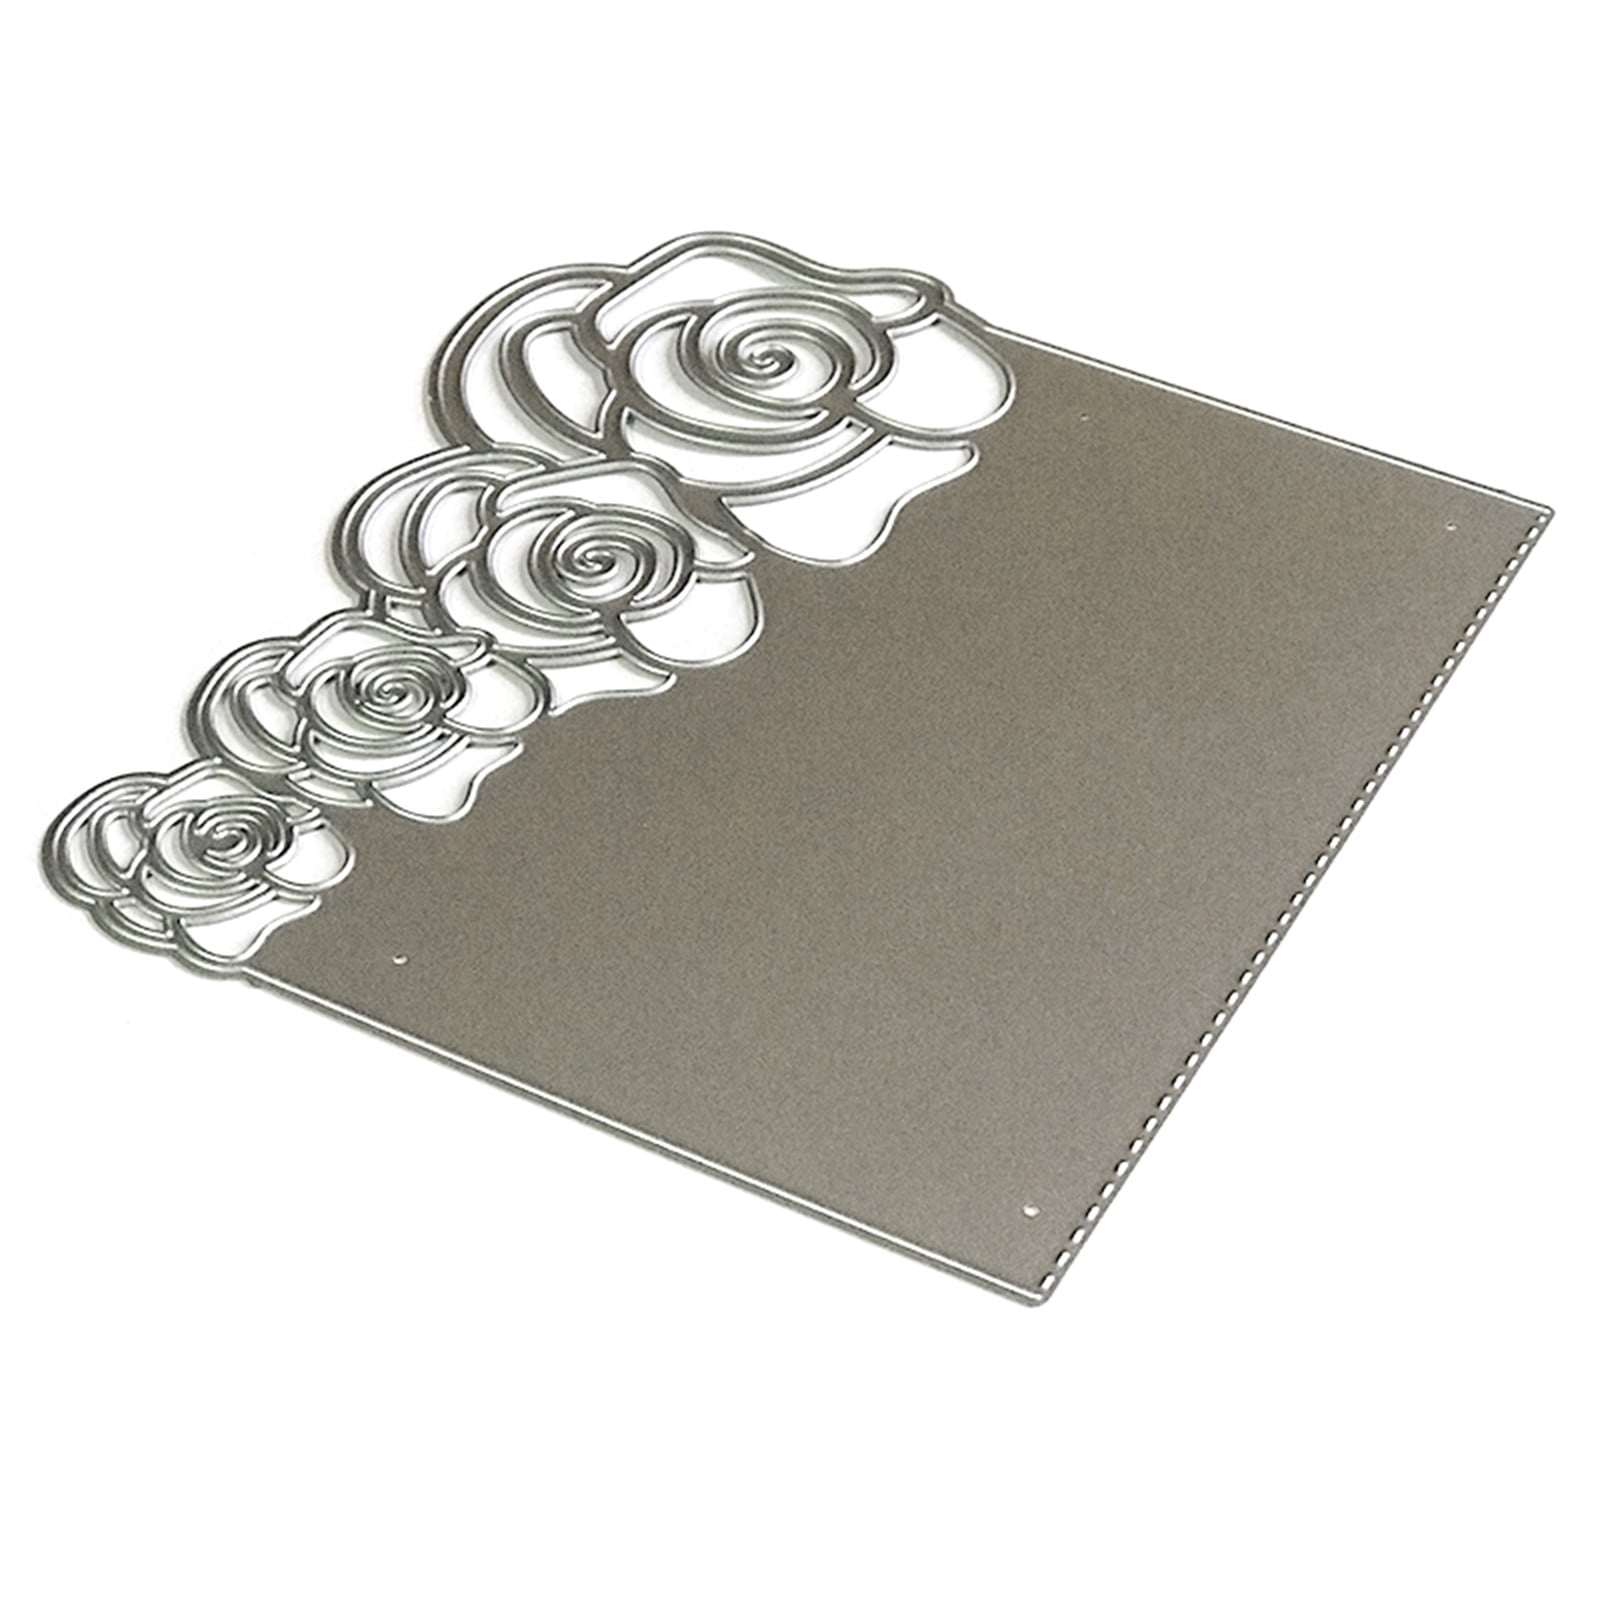 Rose flower Metal Cutting Dies Stencil for DIY Scrapbooking Album Cards Making